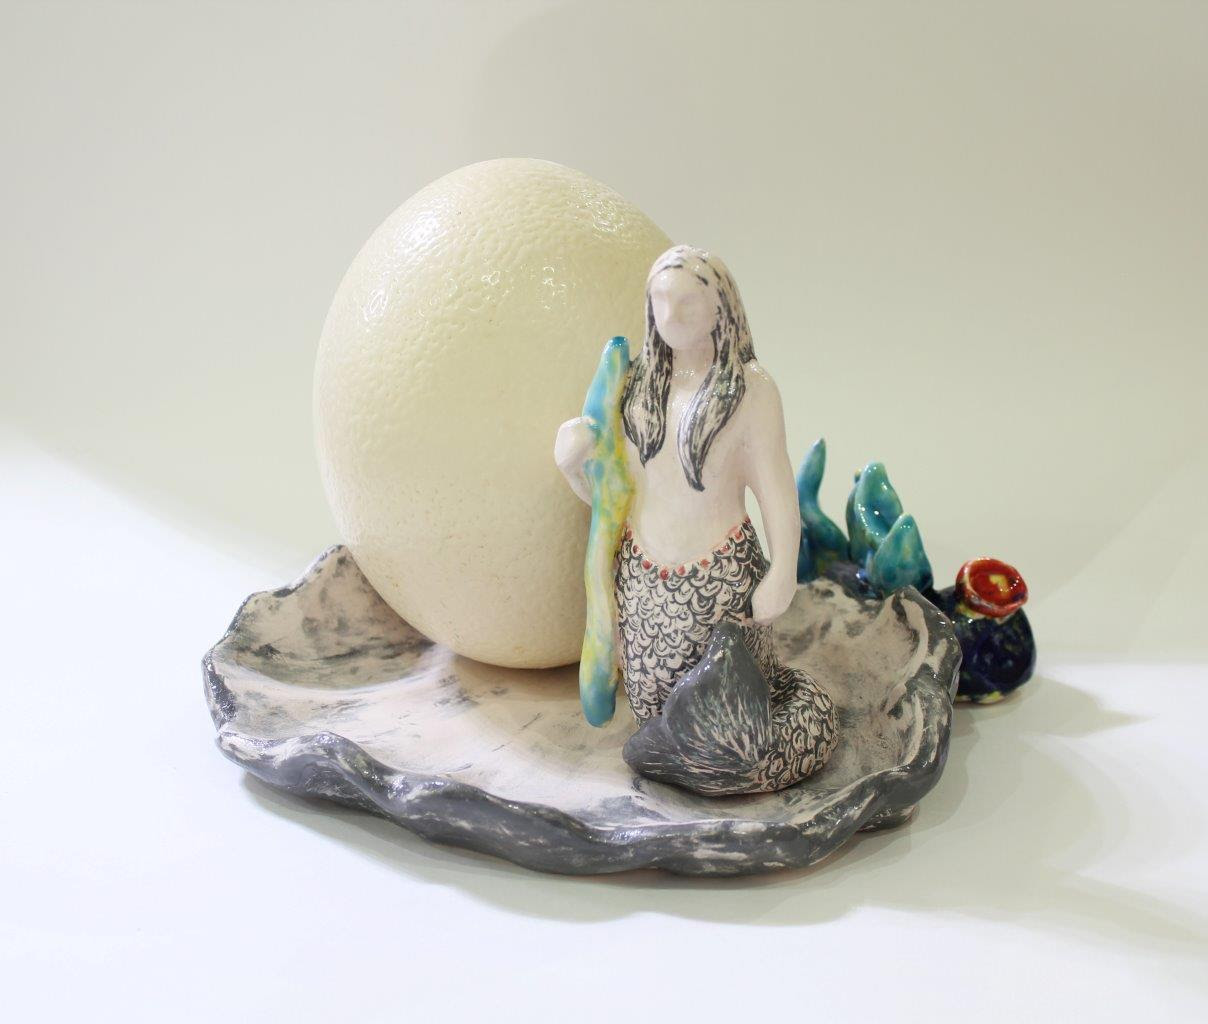 Dorsa Asadi- The Guardian Mermaid, Ostrich egg and ceramic